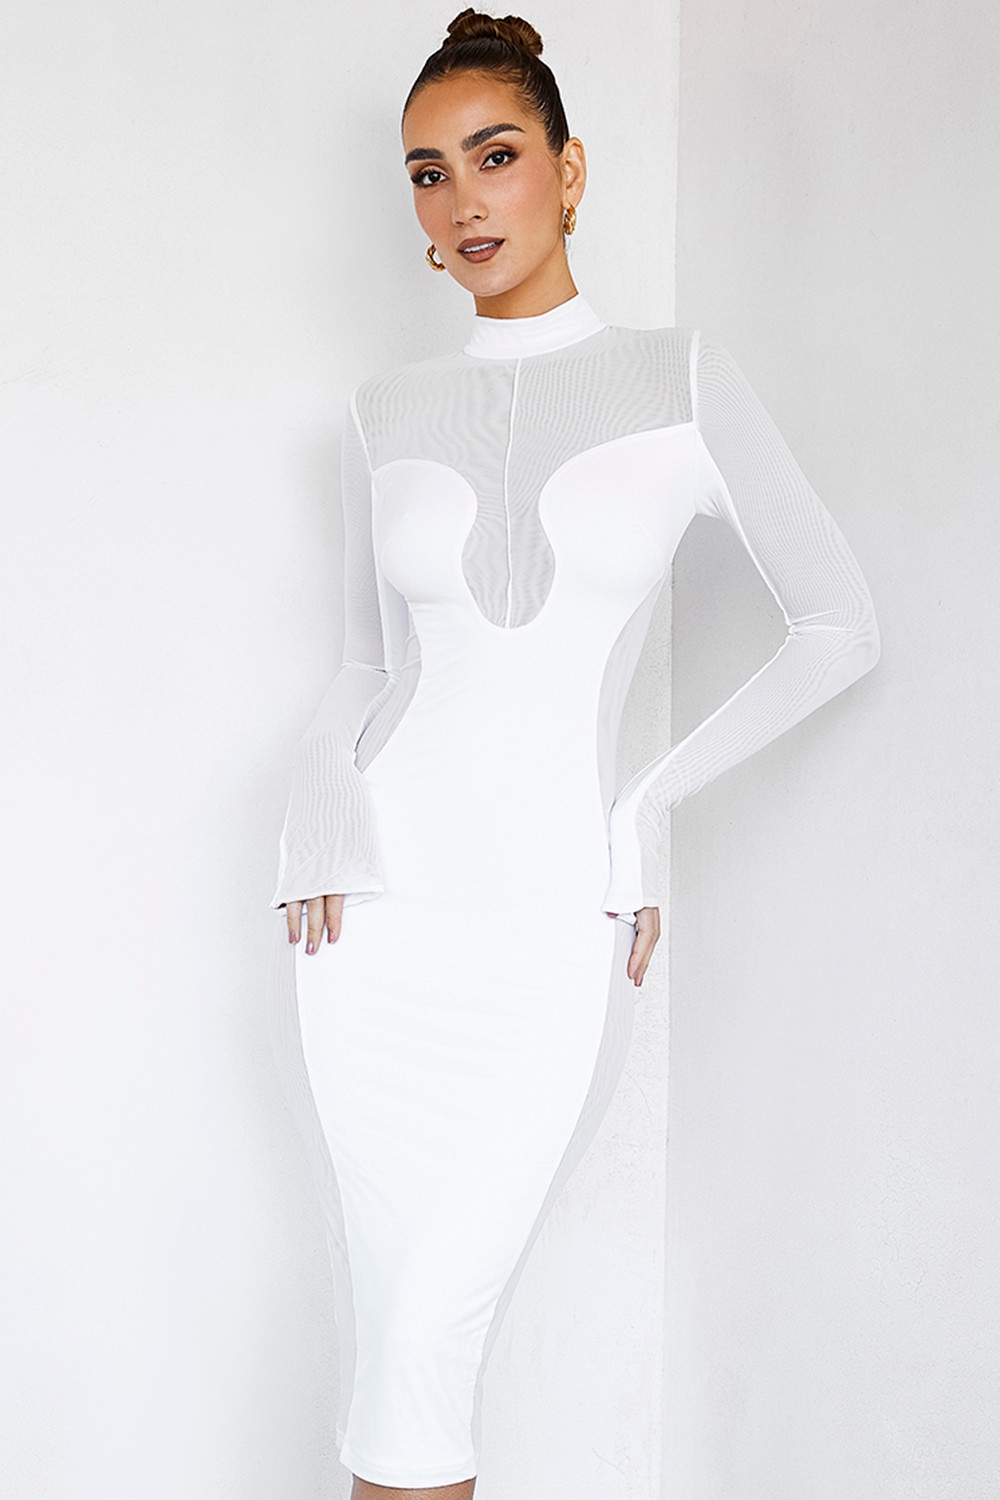 Valour,Mistress Rocks  White Panelled Midi Dress - SALE